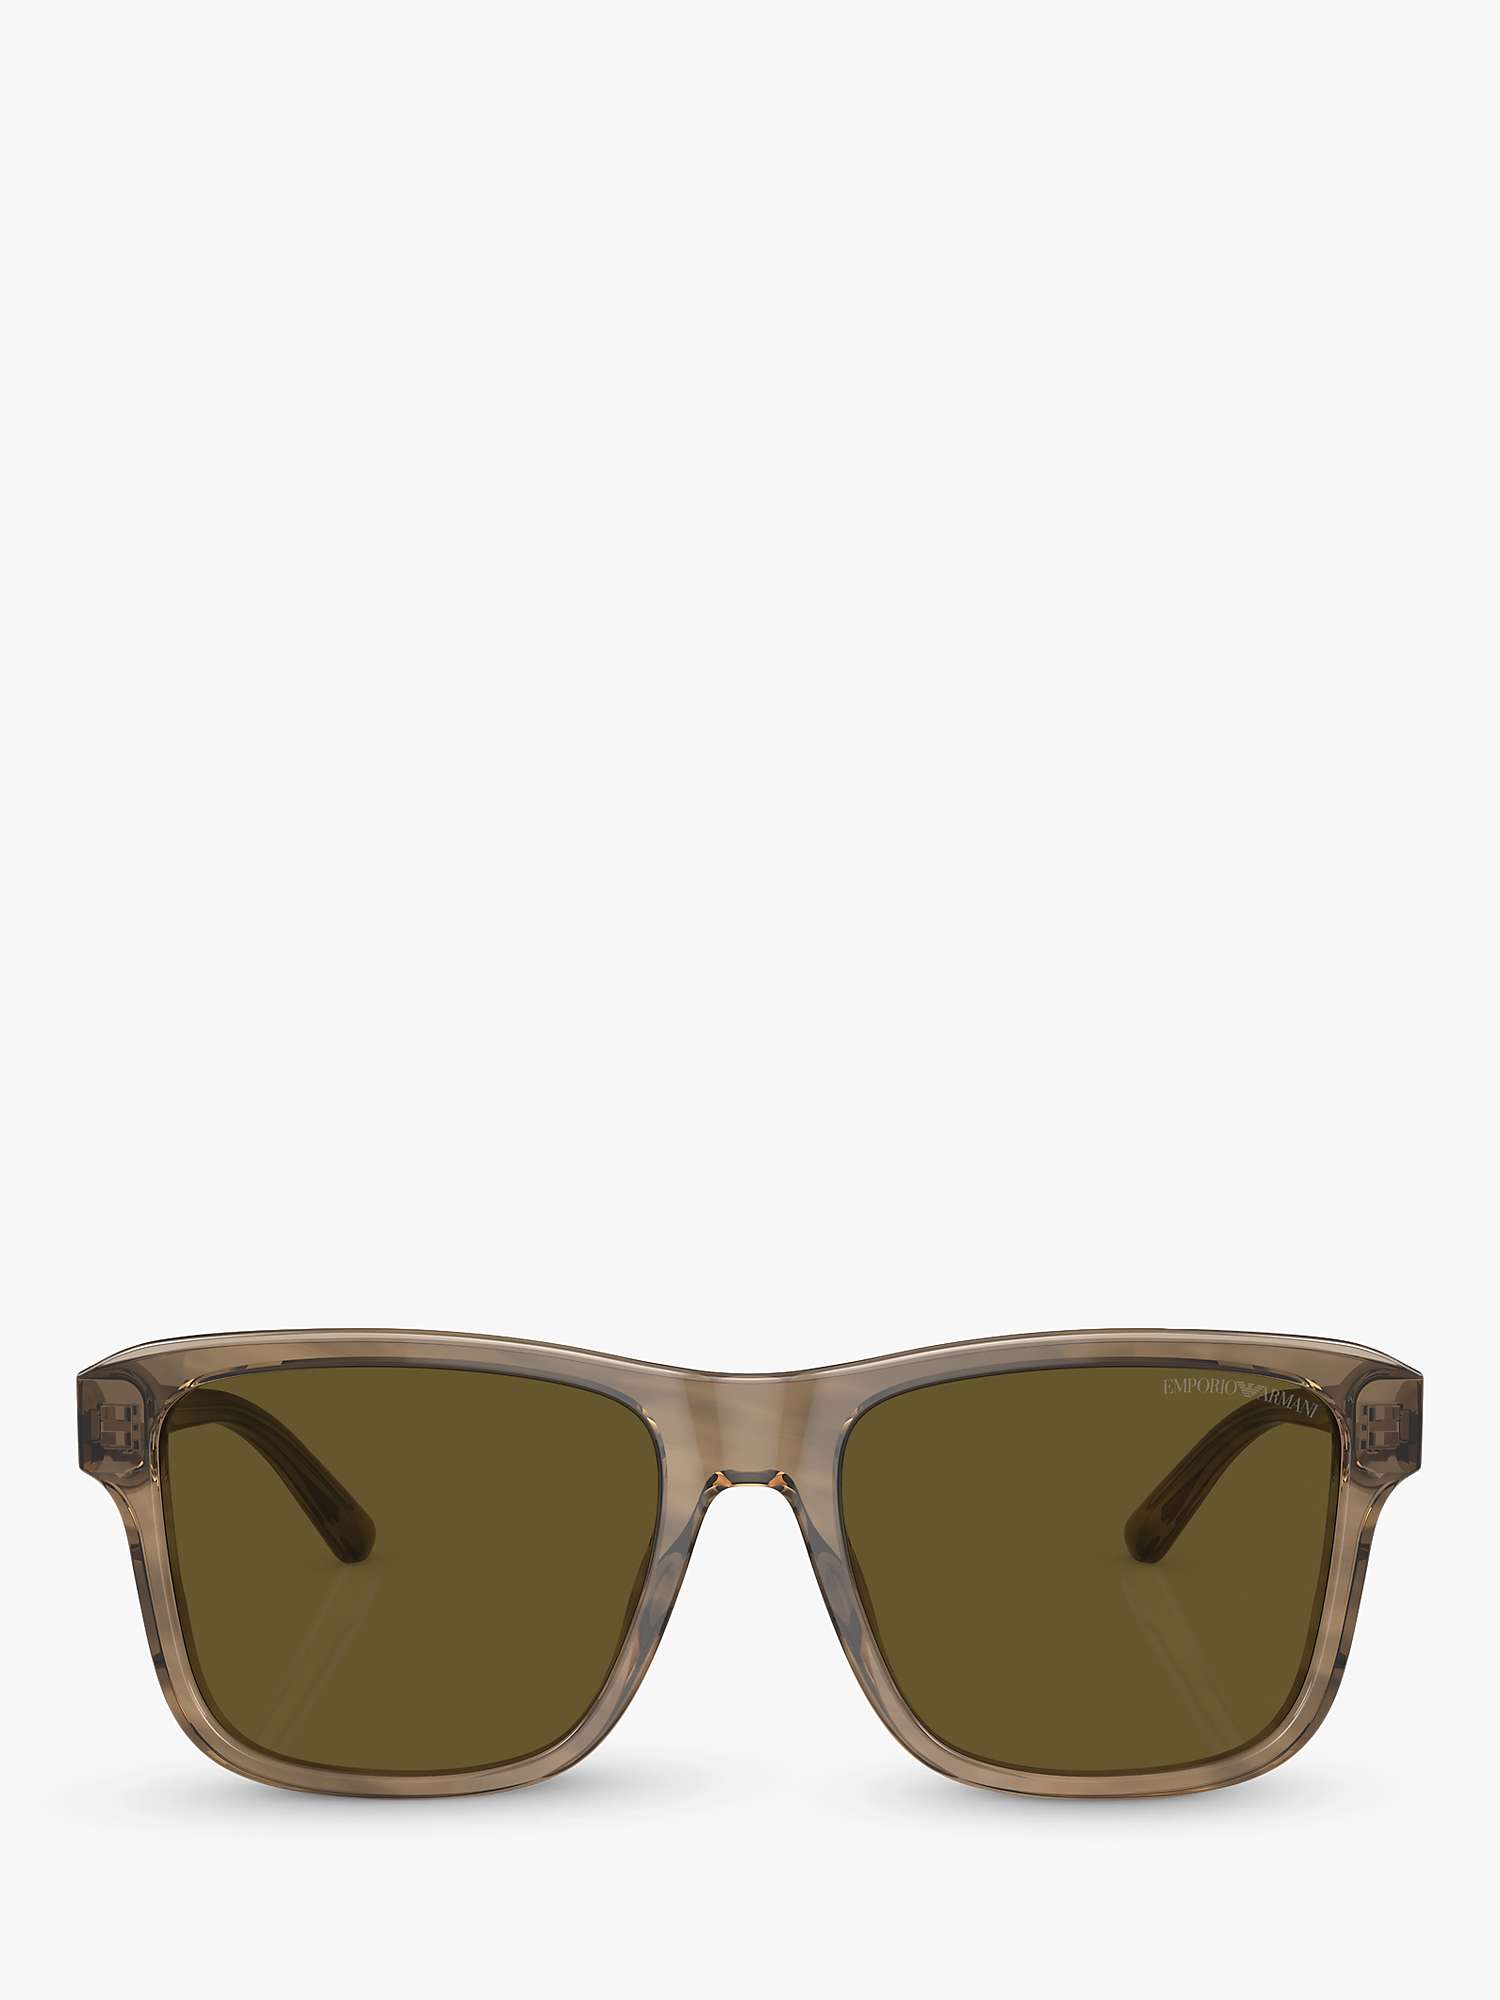 Buy Emporio Armani EA4208 Men's Pillow Sunglasses, Brown/Green Online at johnlewis.com